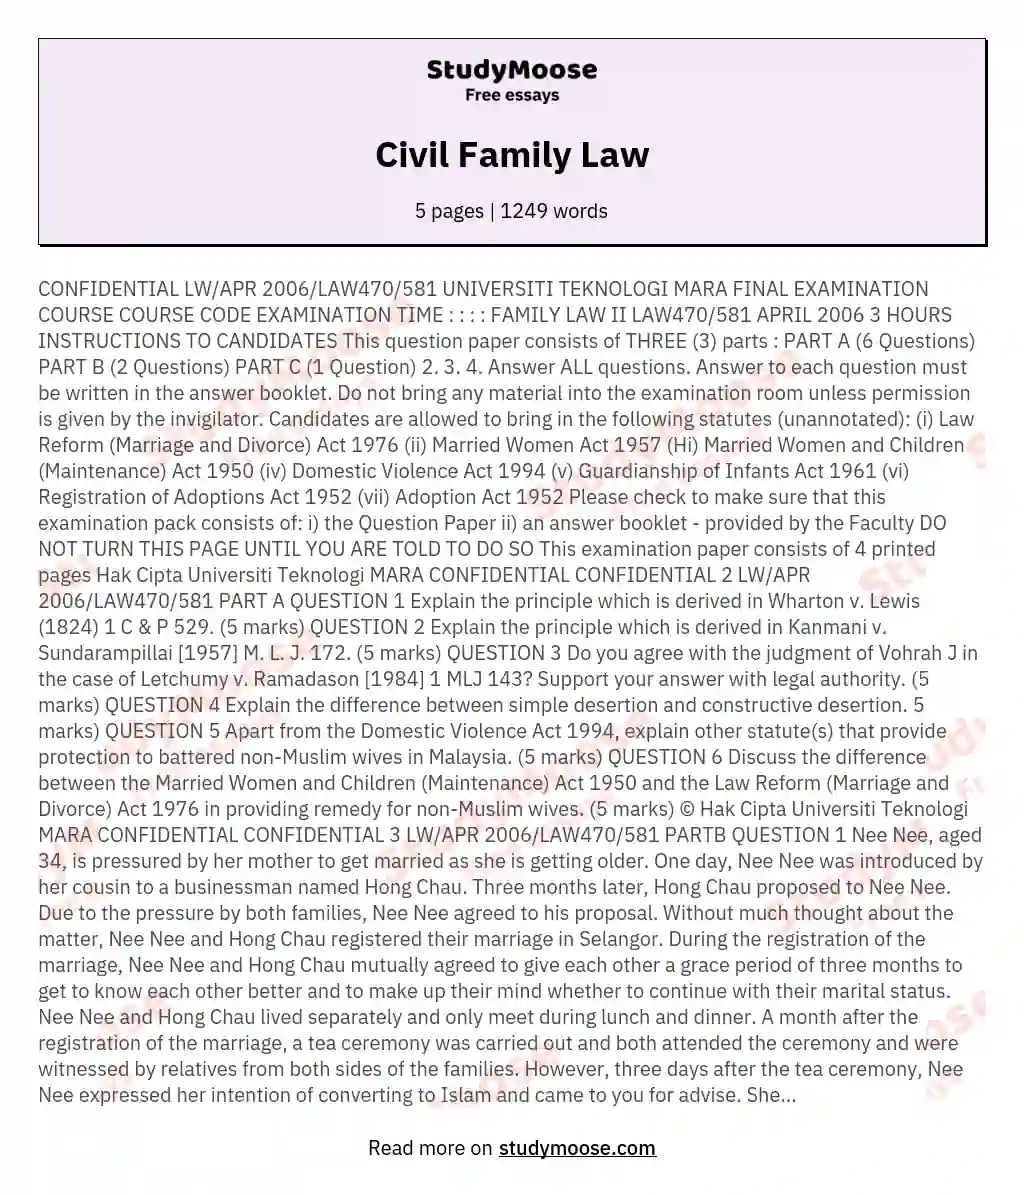 Civil Family Law essay